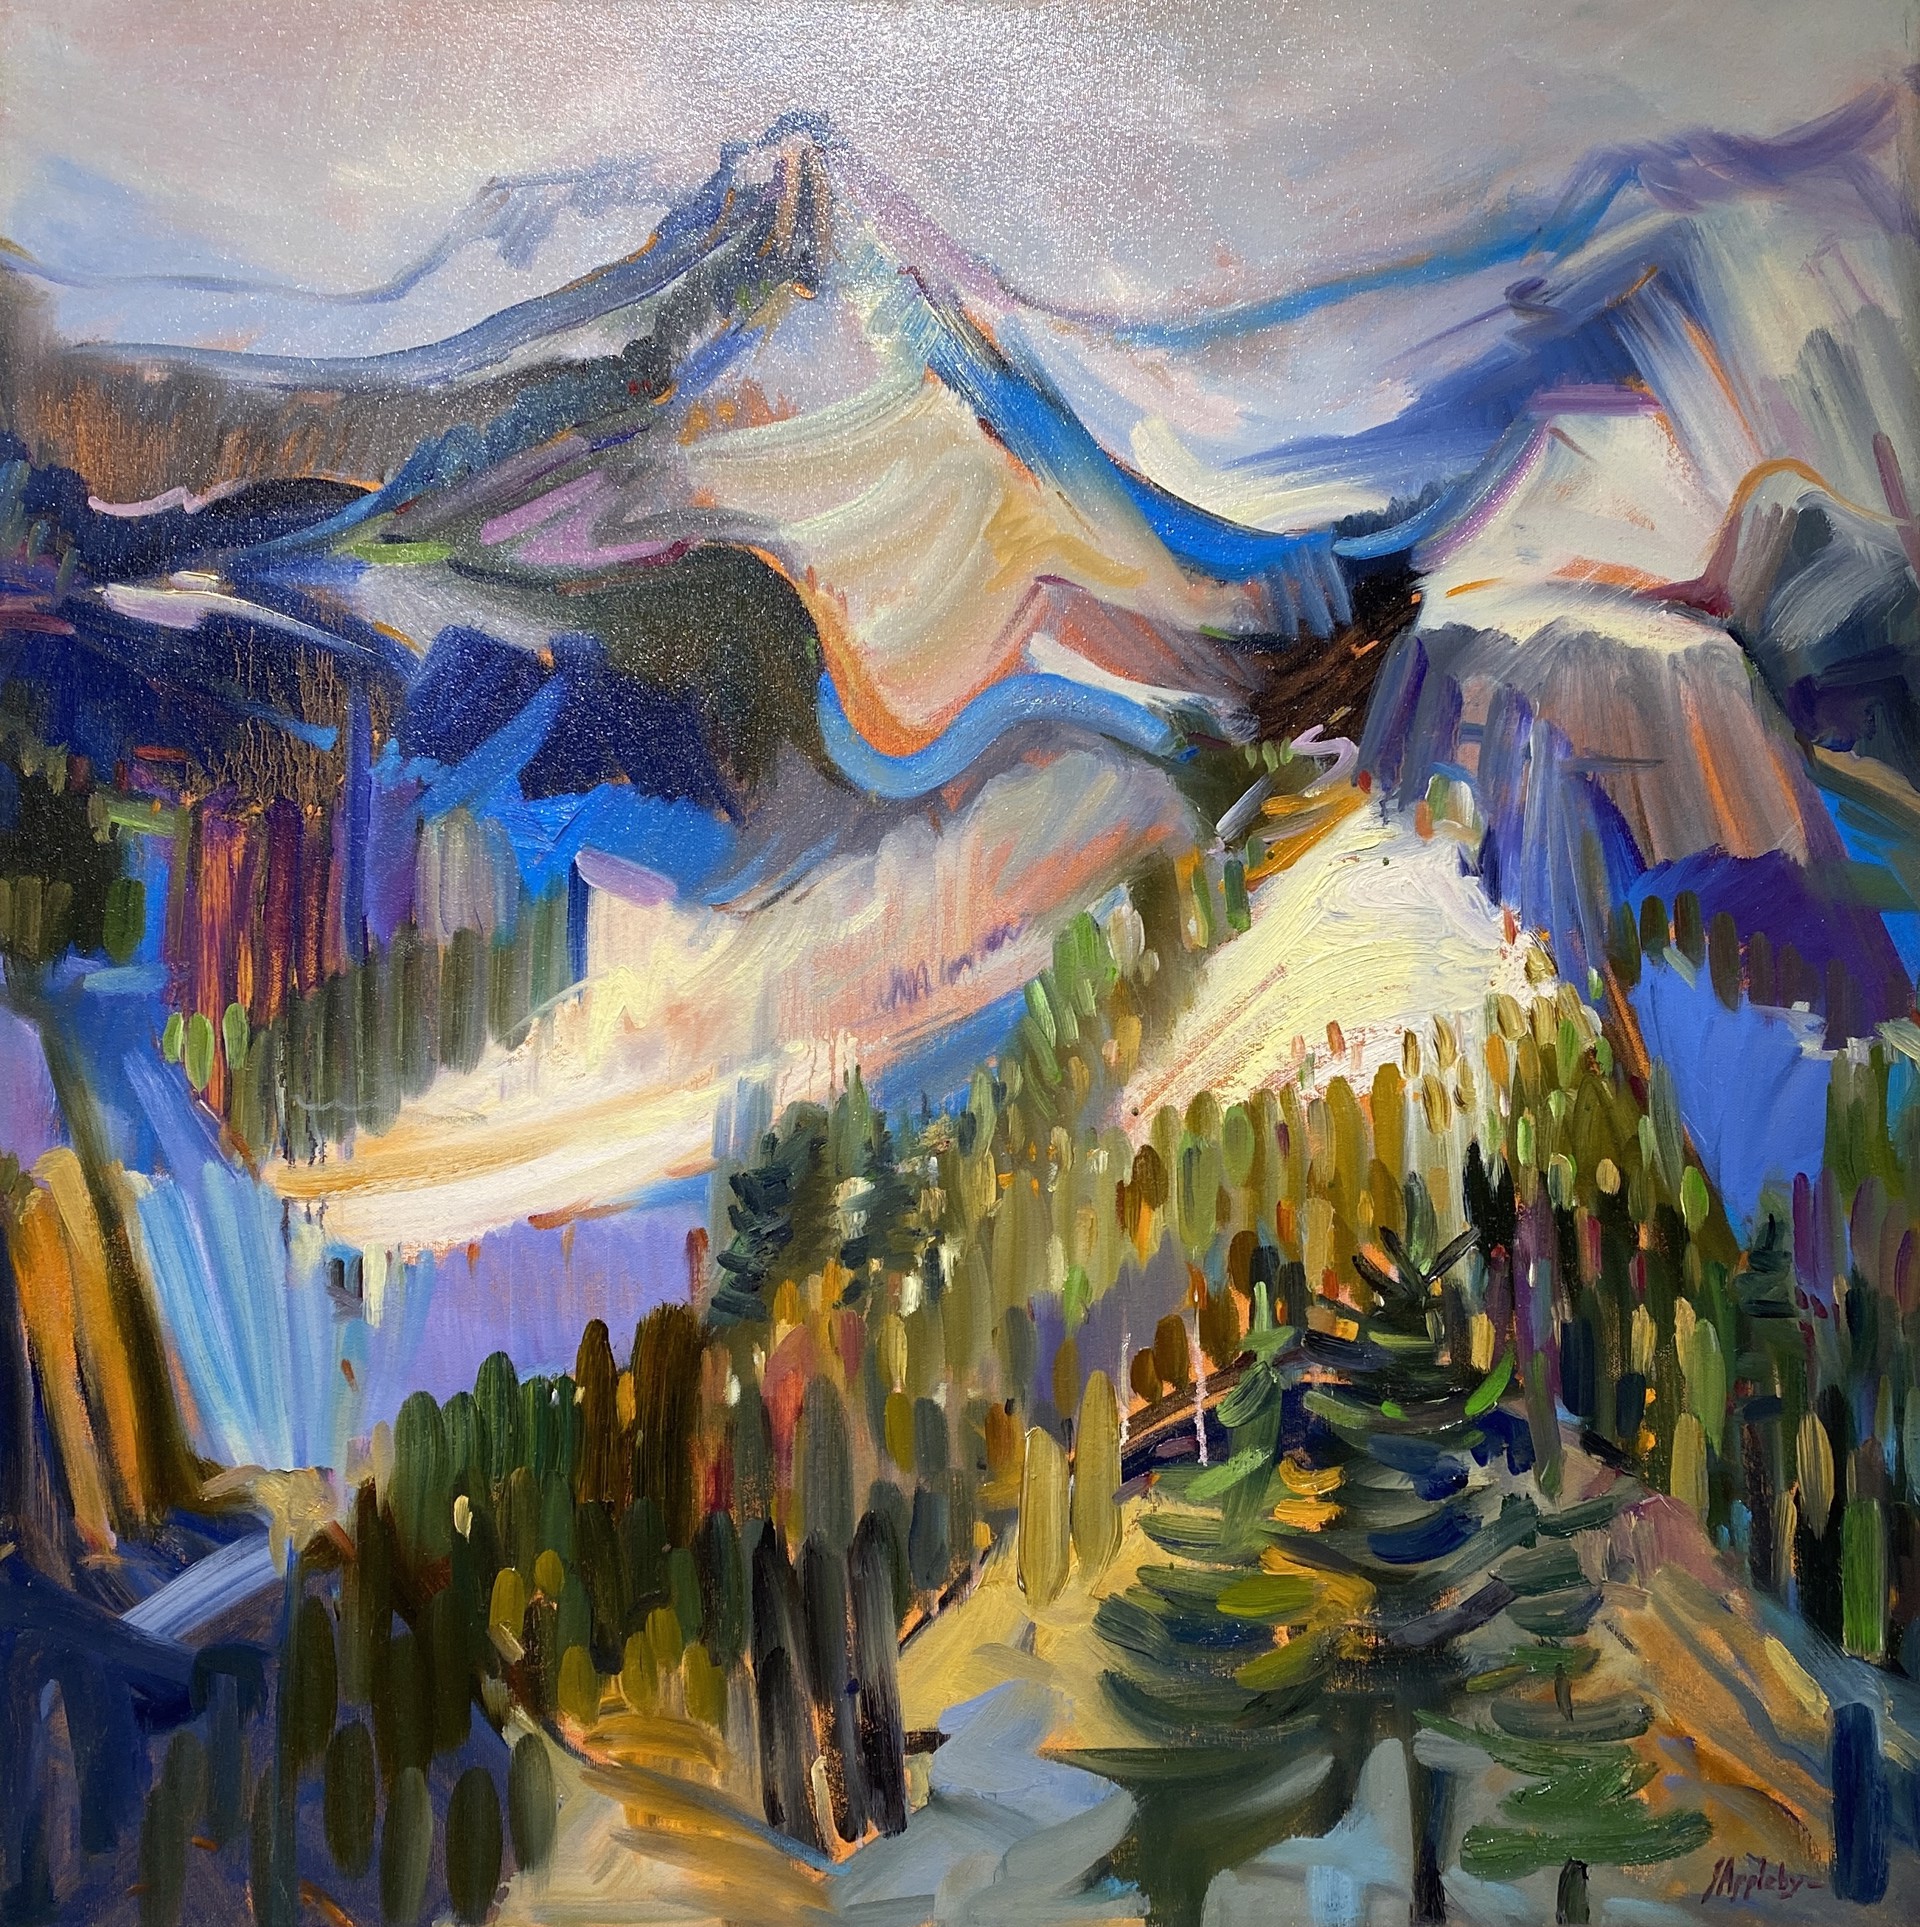 On The Ridge by Jane Appleby